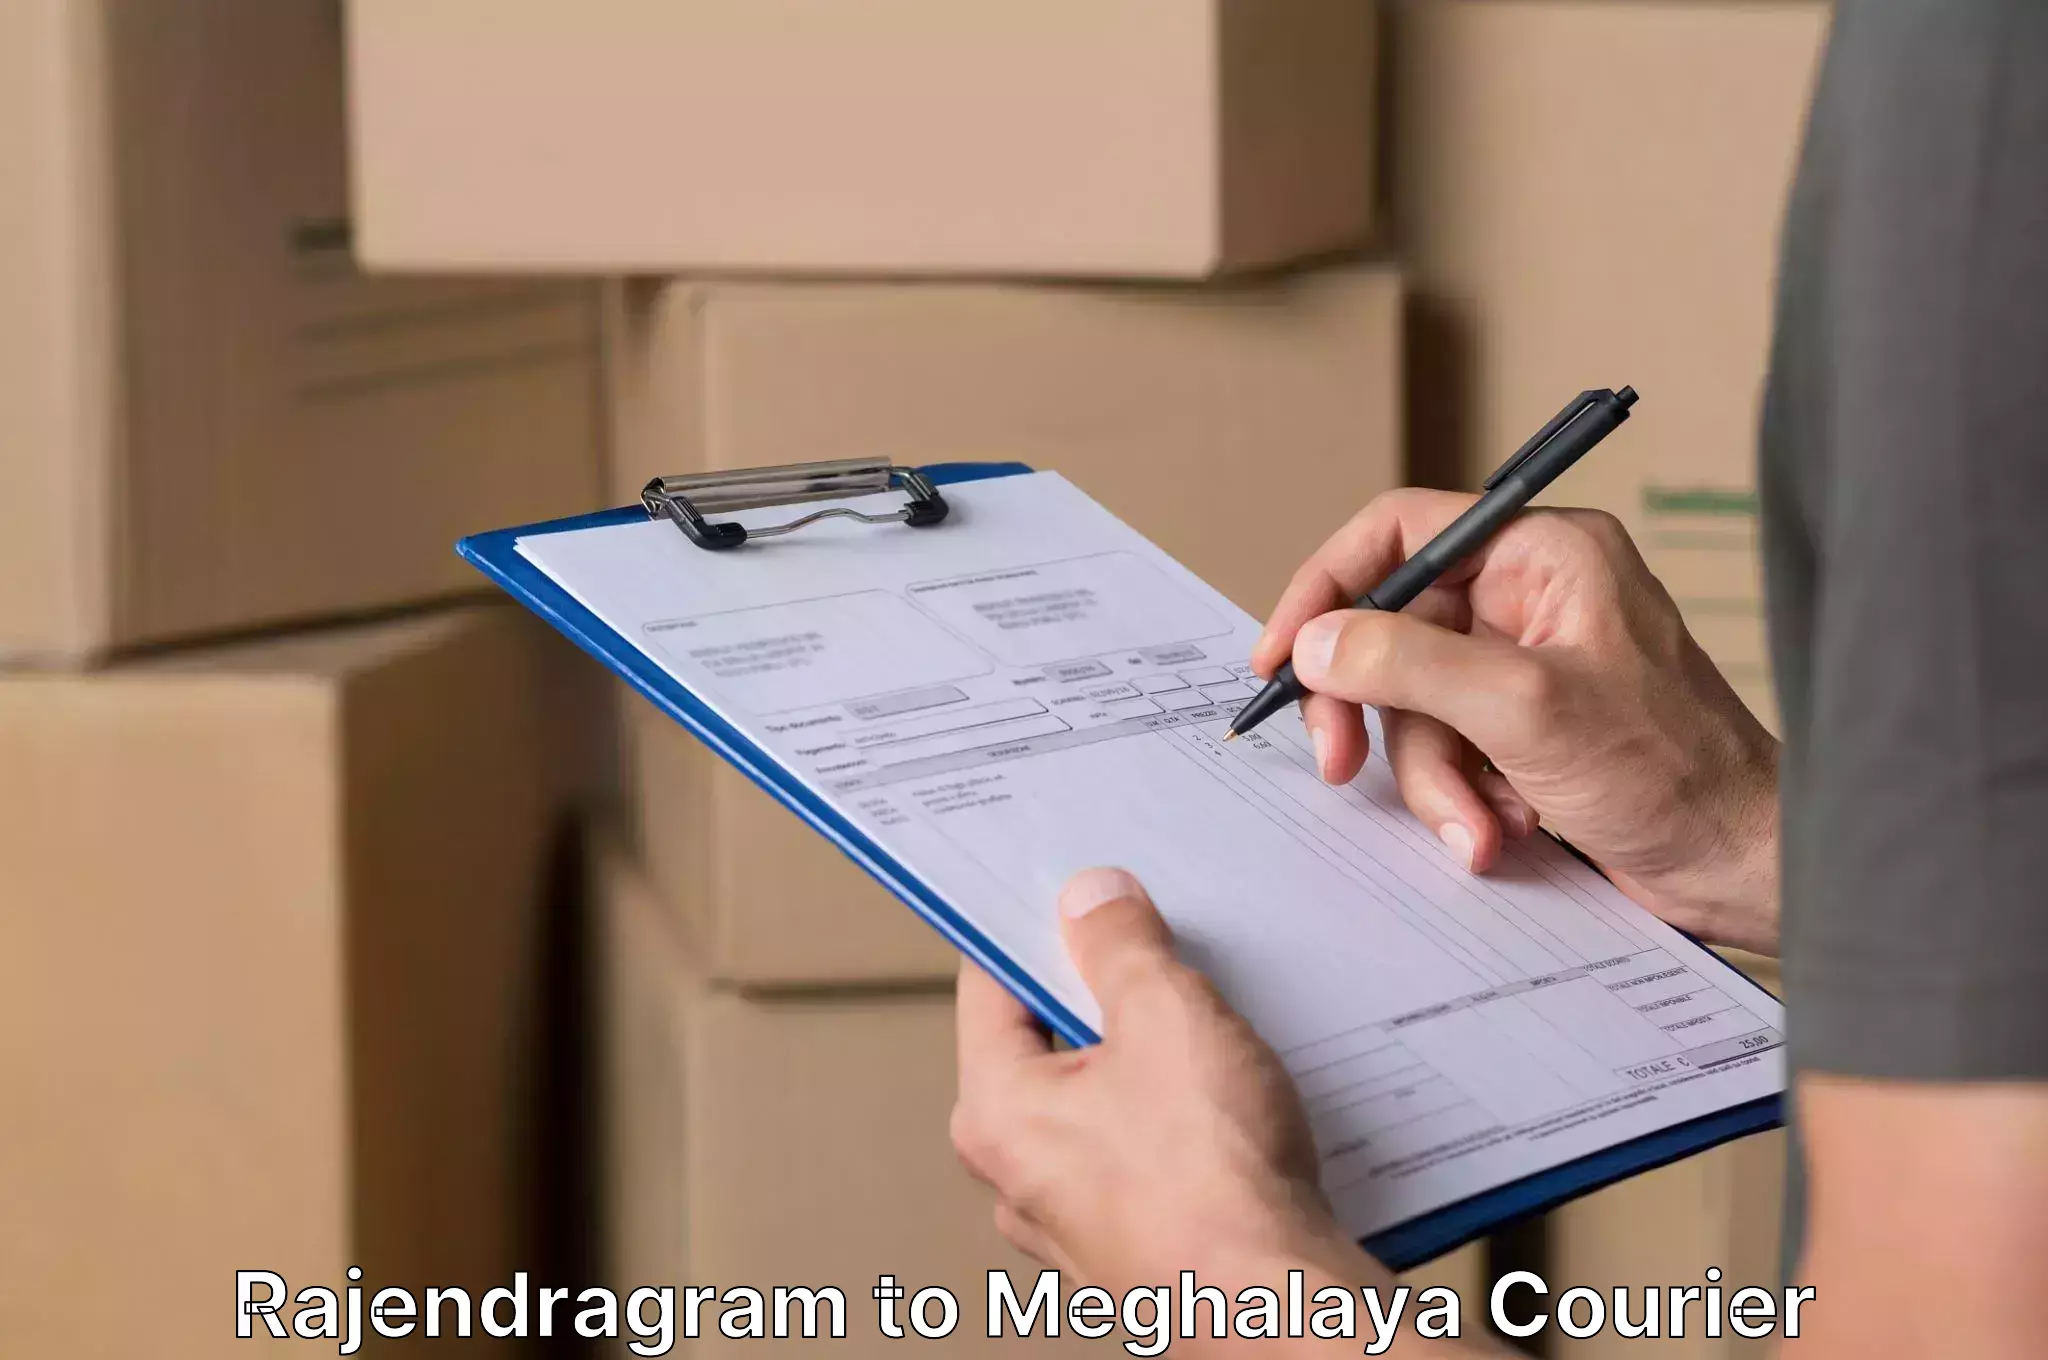 Professional moving company Rajendragram to Shillong